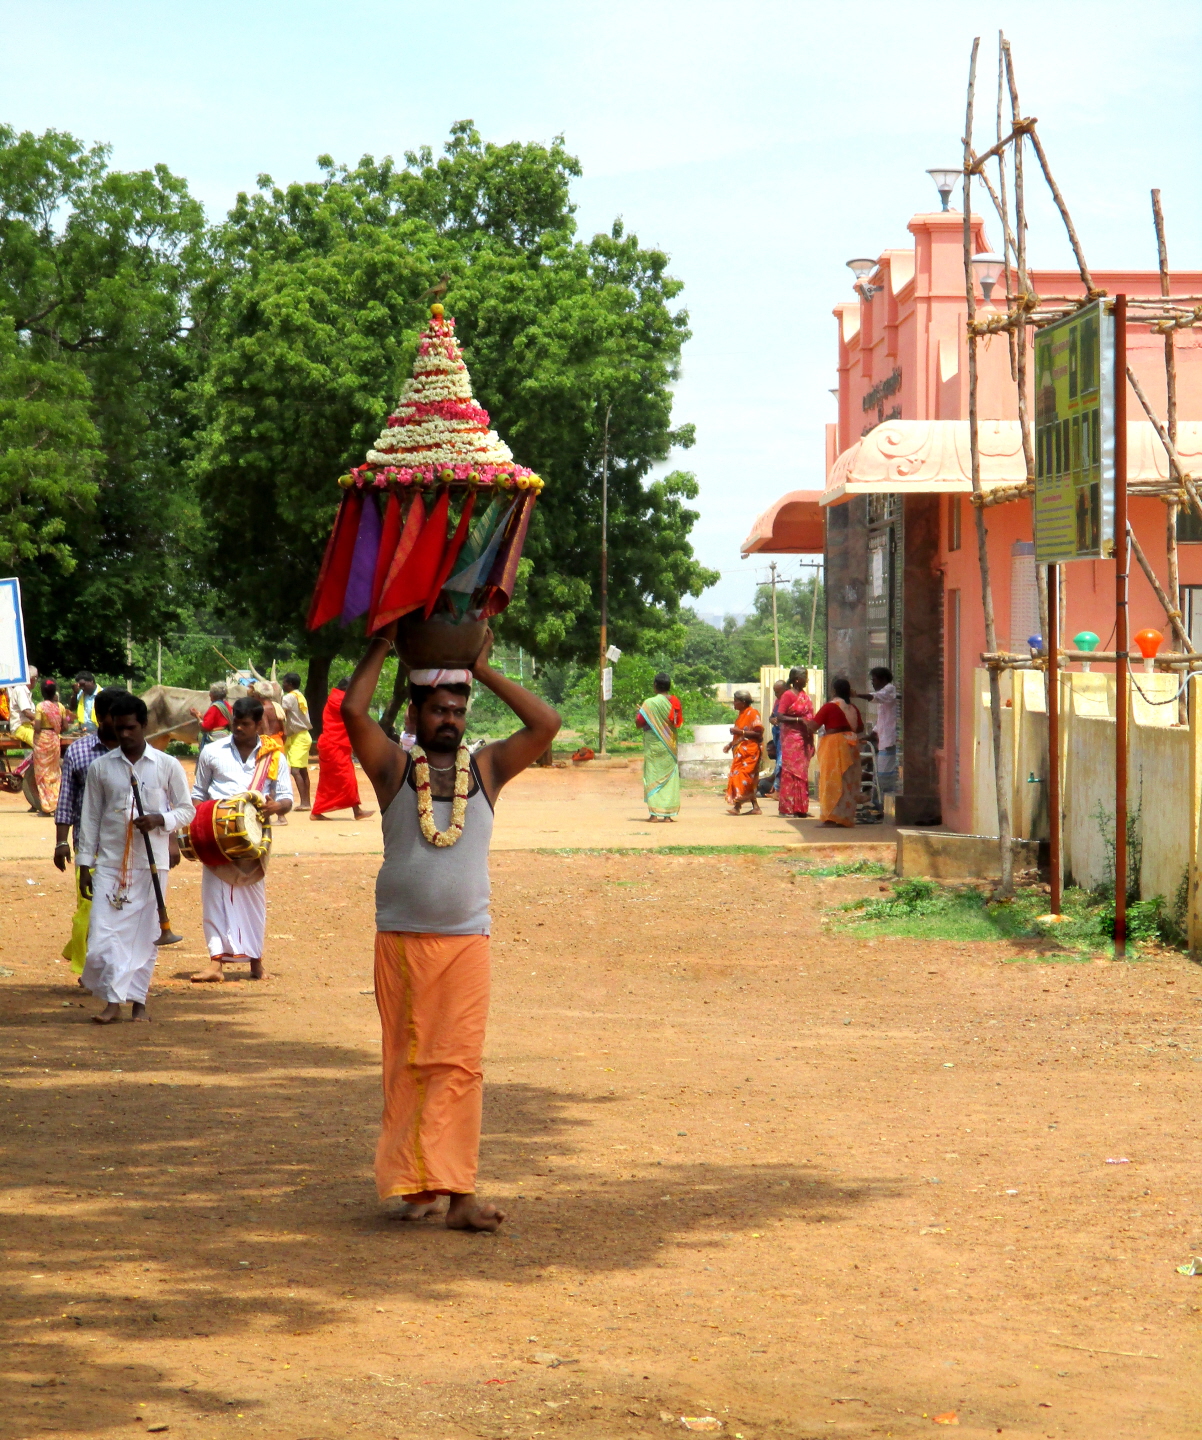 Procession of Devotees for village Goddess, Vadalur, Tamil Nadu, India